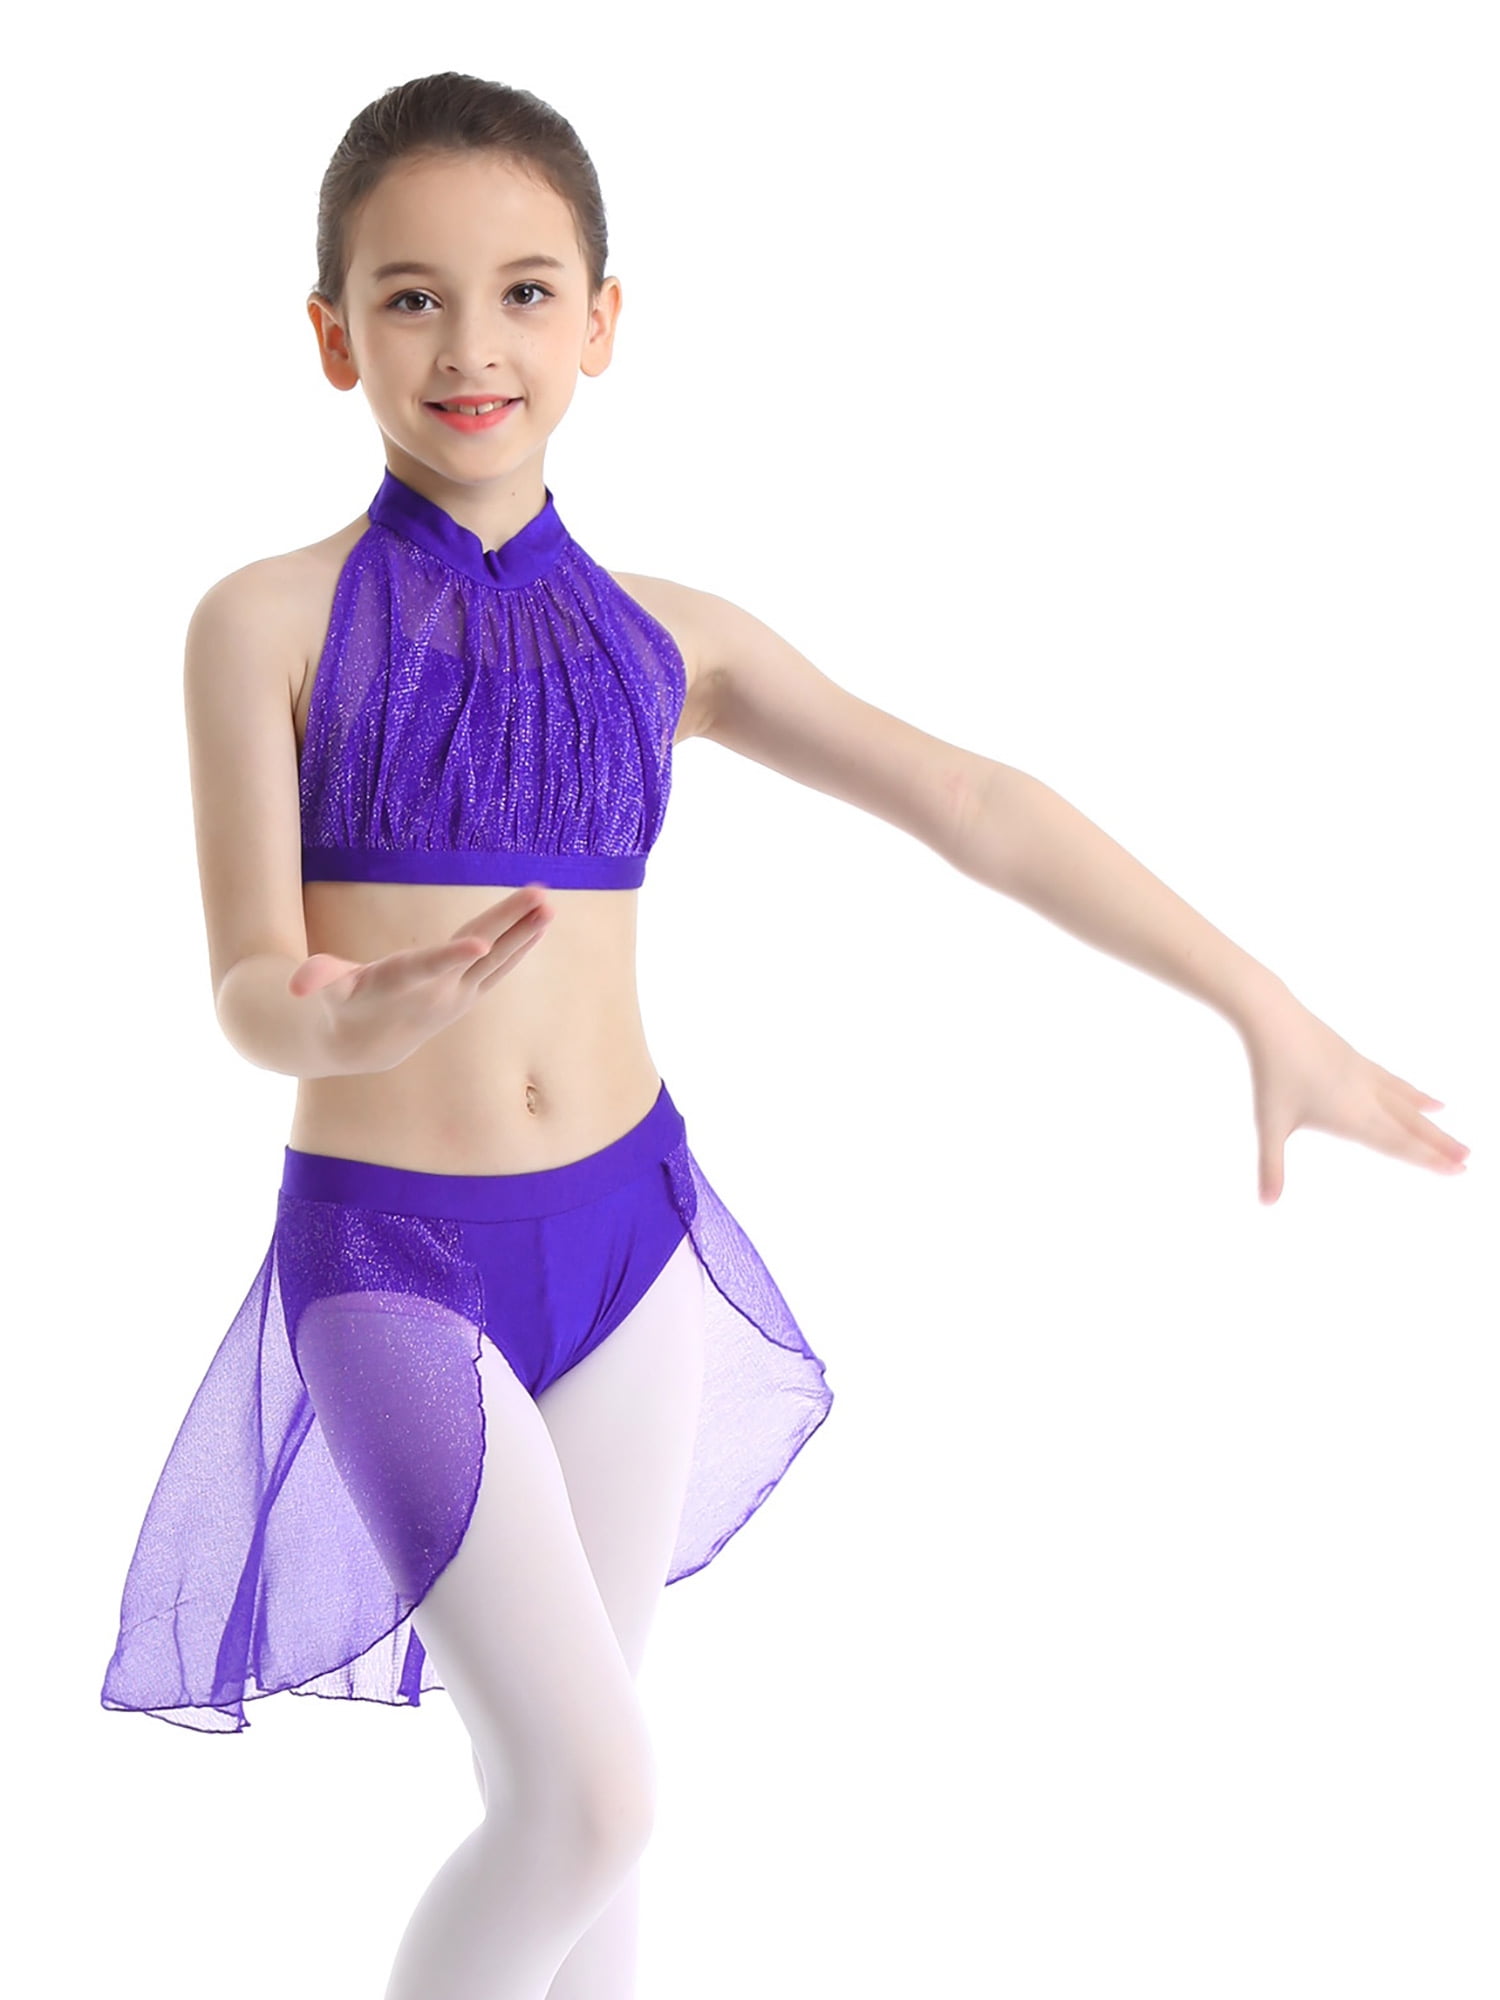 Kids Baby Girls Ballet Gymnastics Yoga Bra Tops+Shorts Outfit Sports Dance Wear 